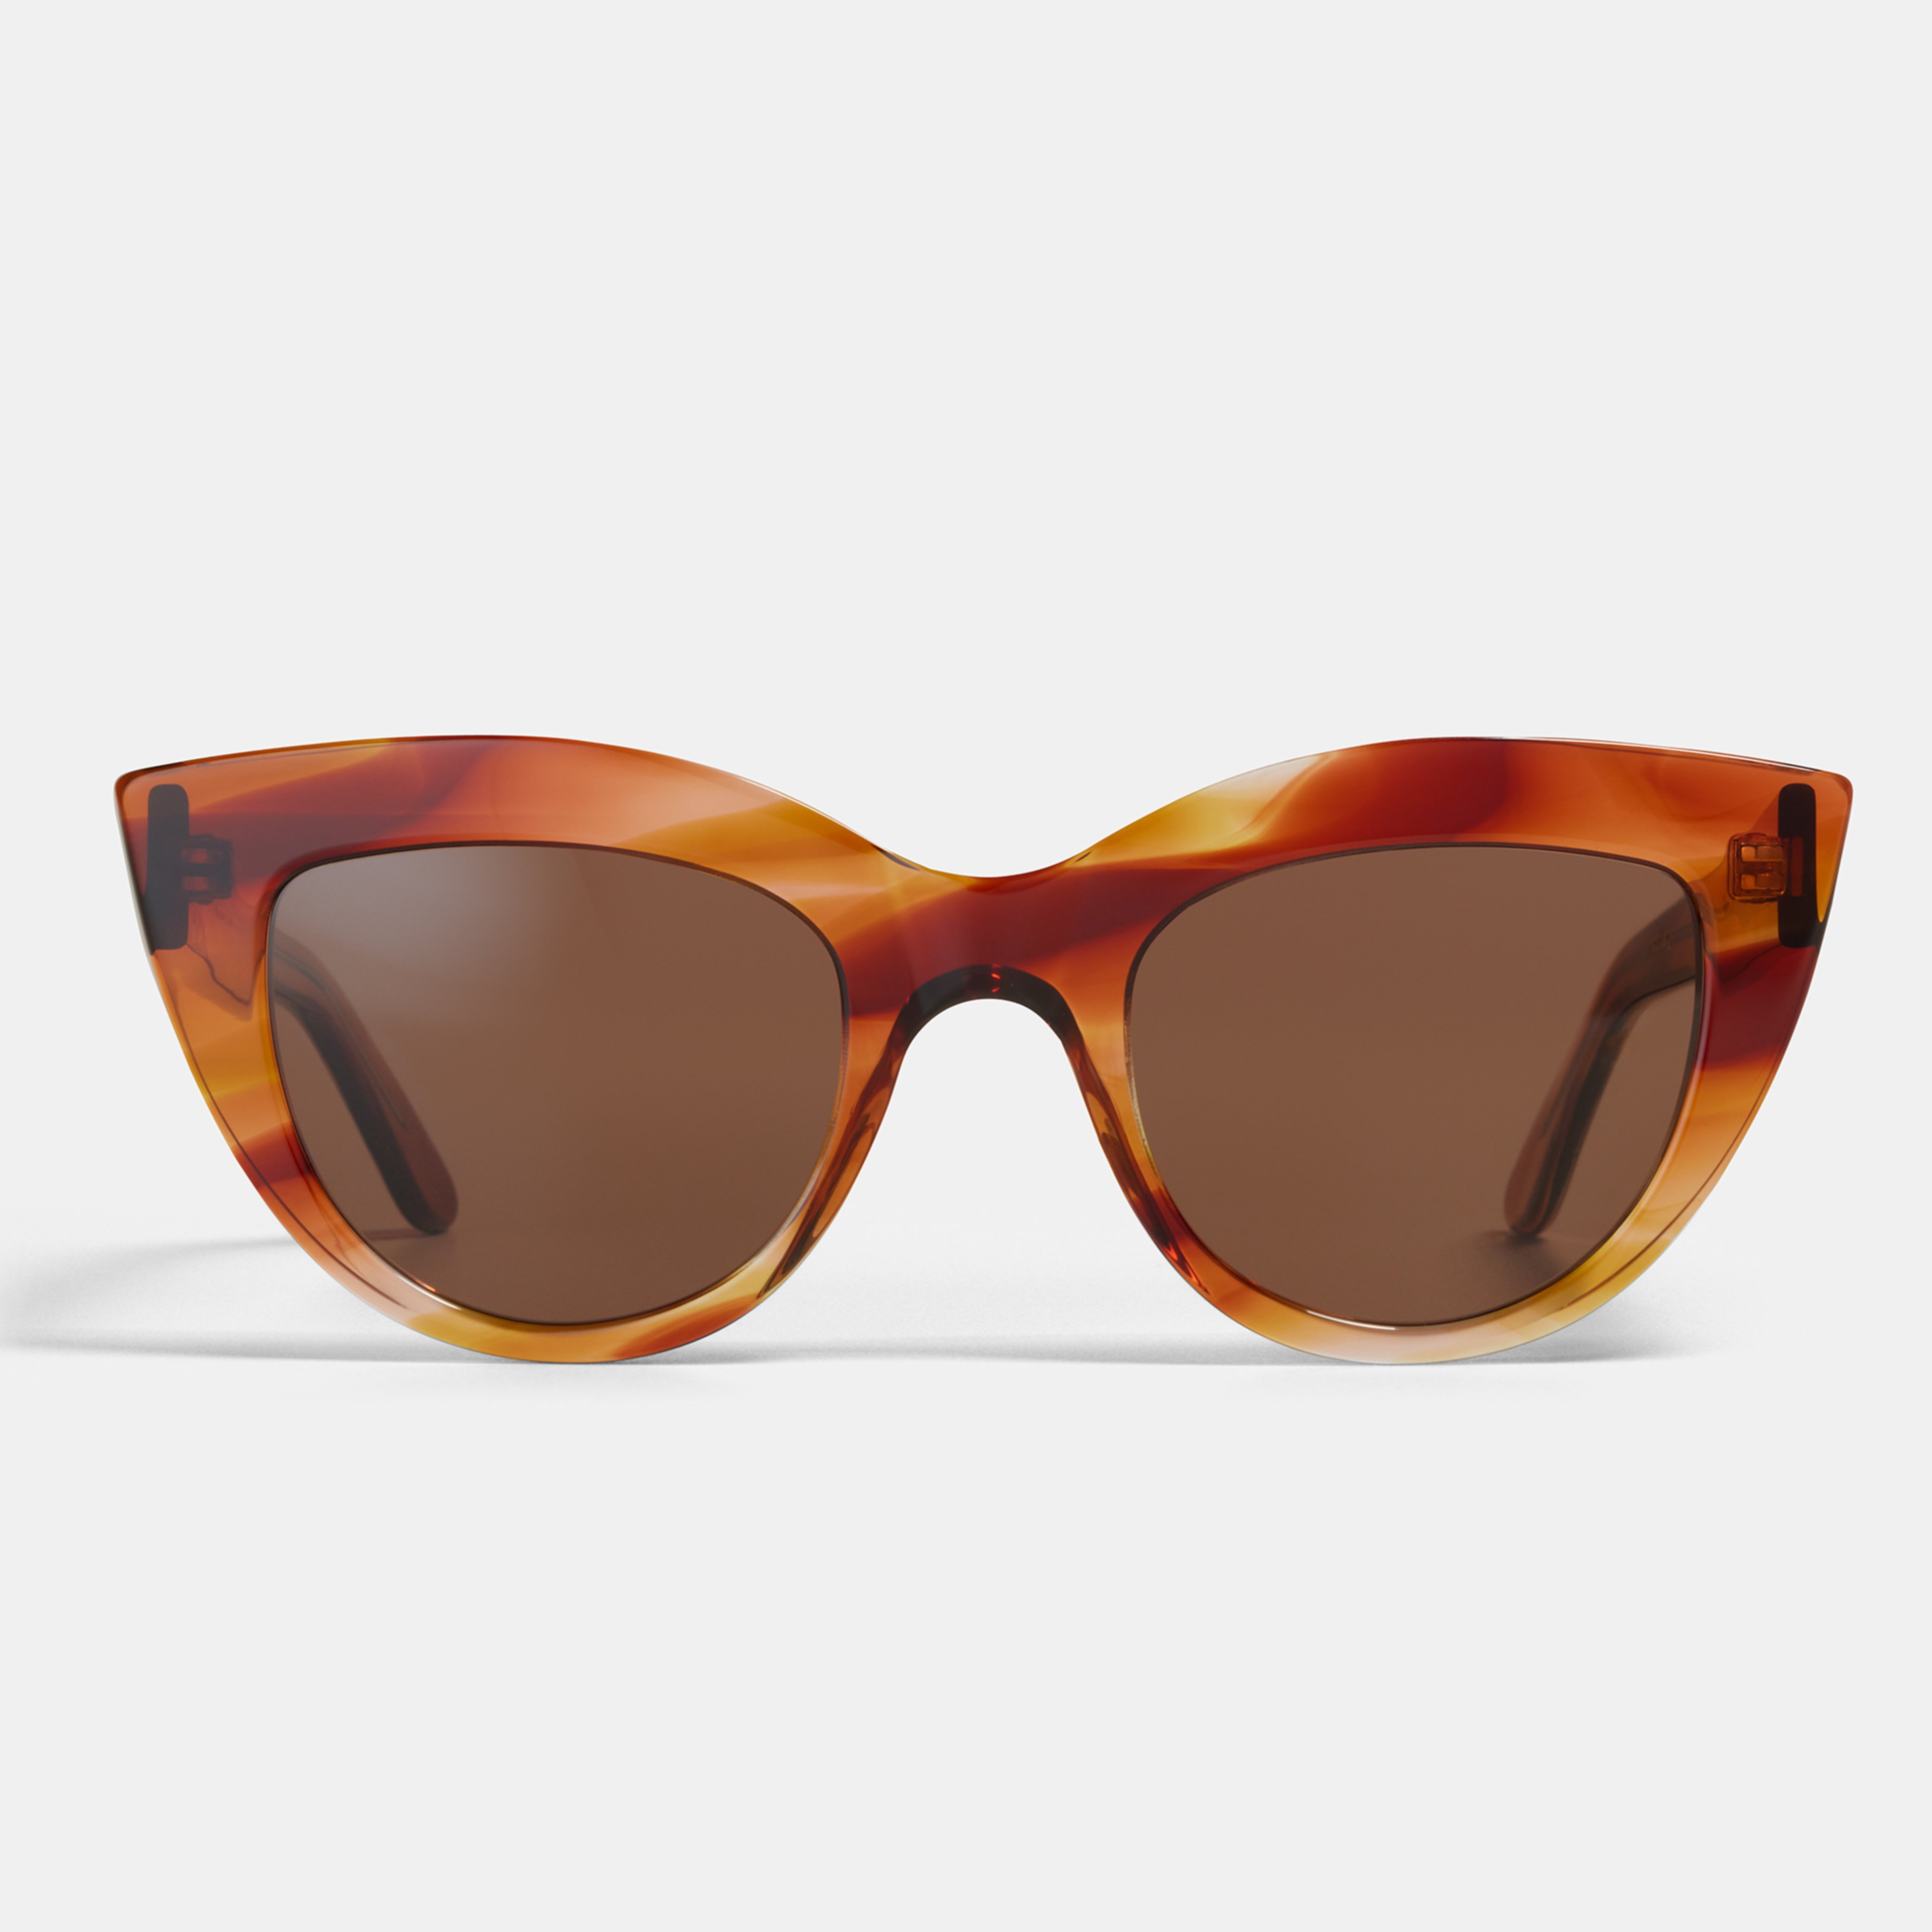 Ace & Tate Sunglasses |  Bio acetate in Brown, Red